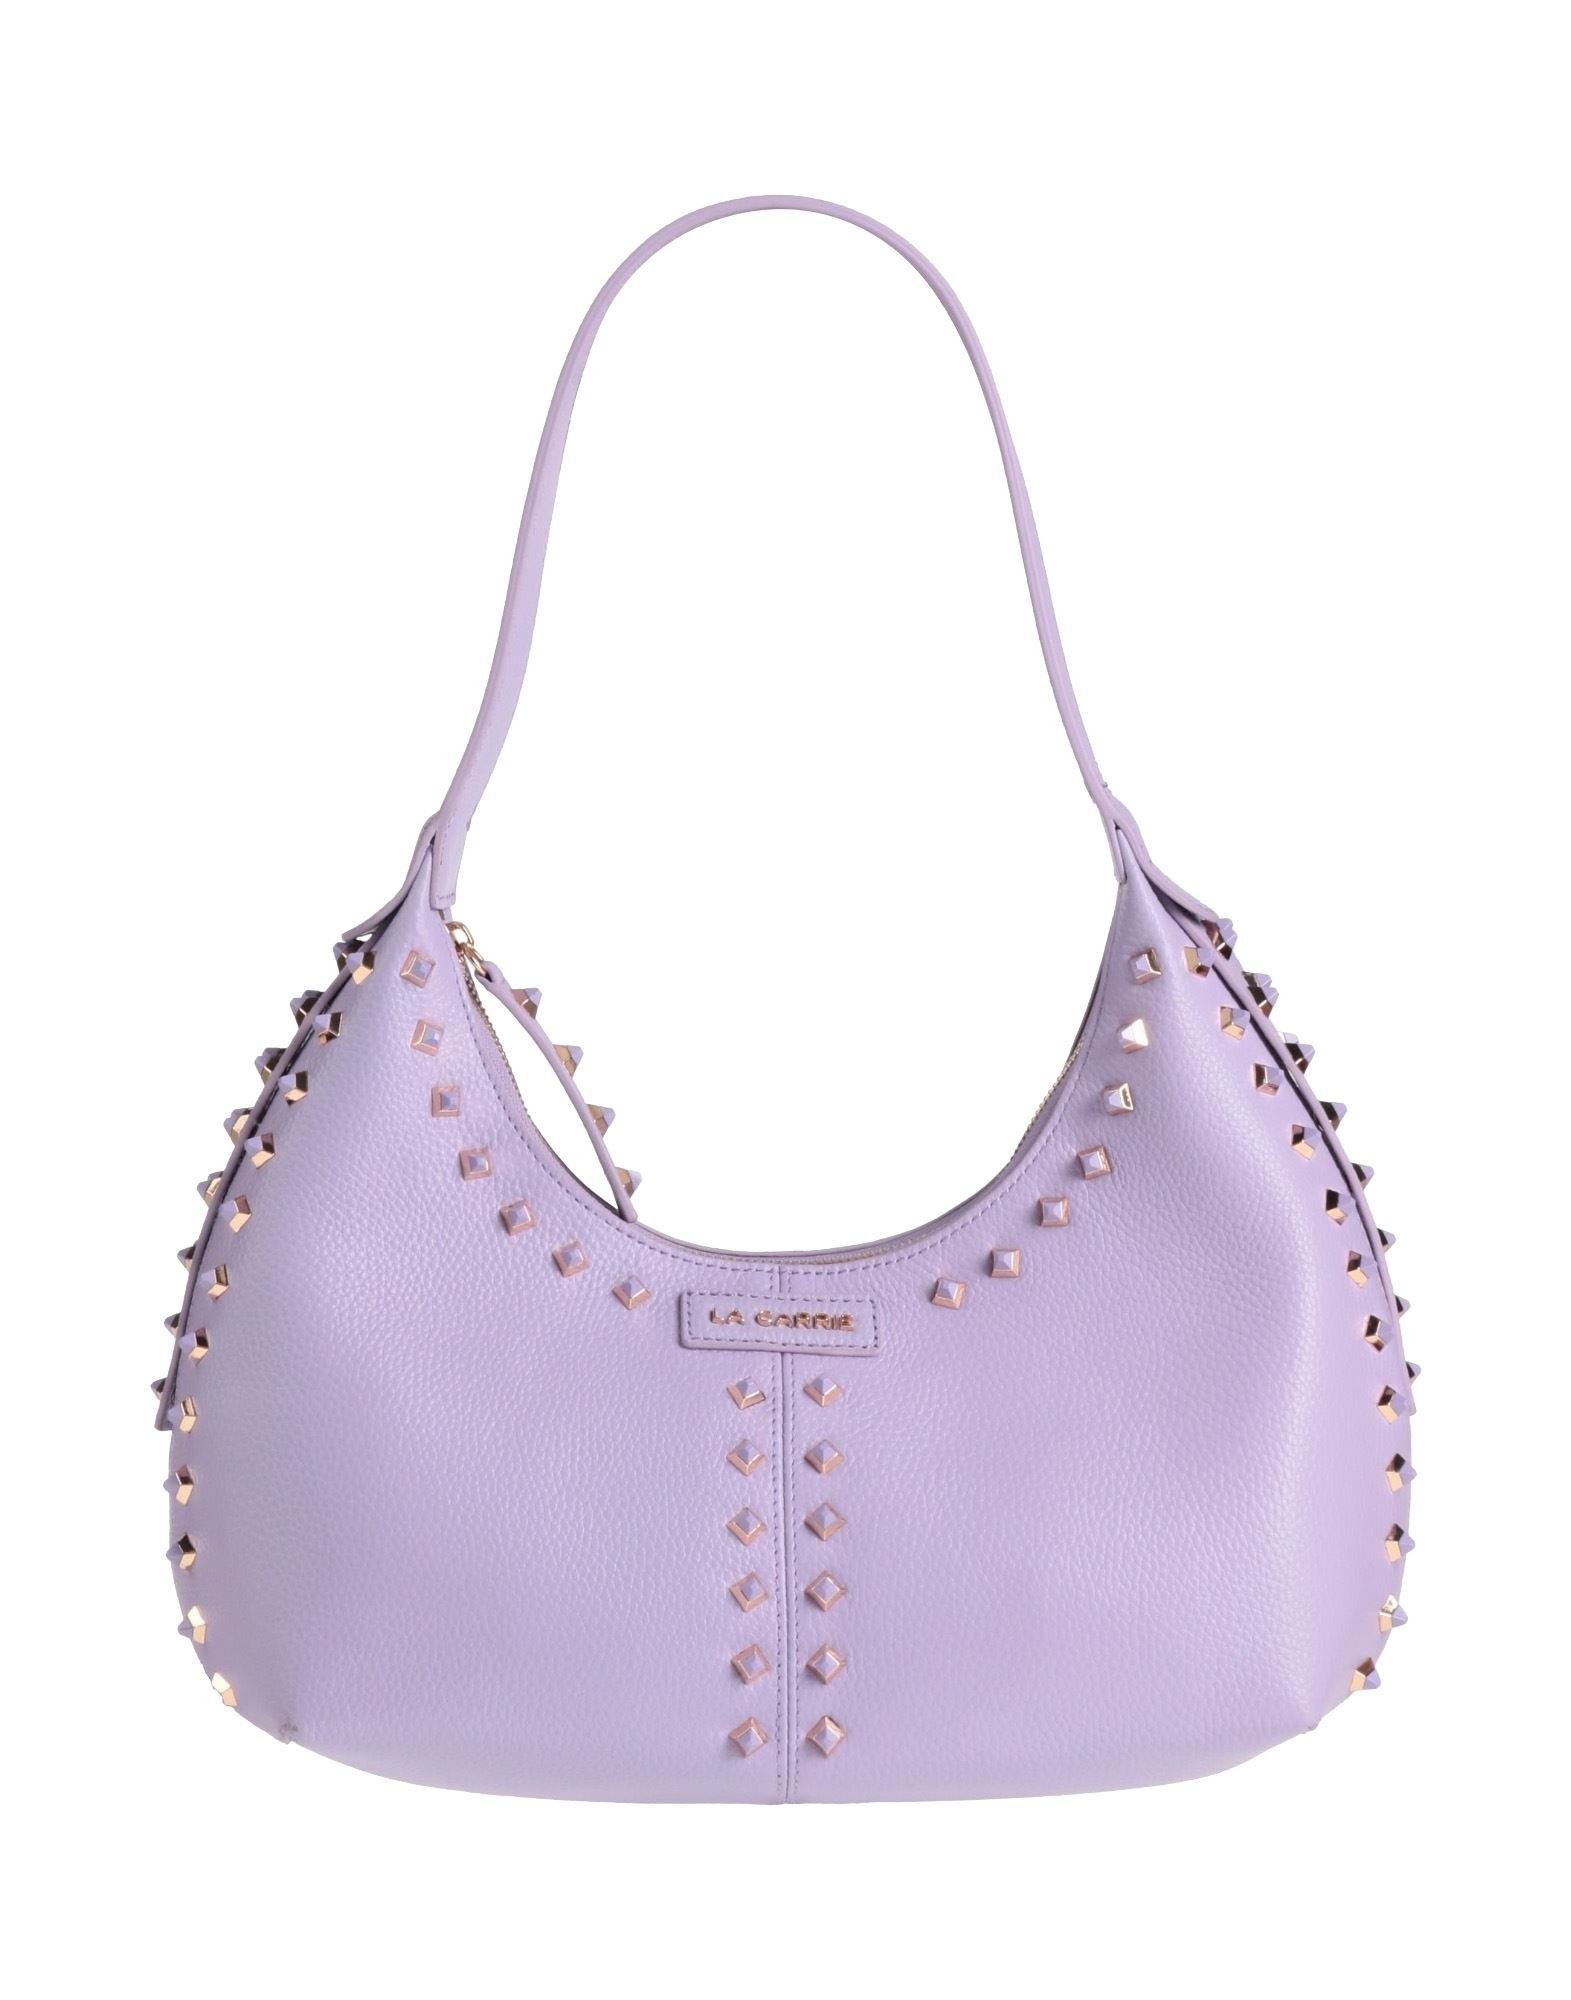 La Carrie Handbags In Lilac